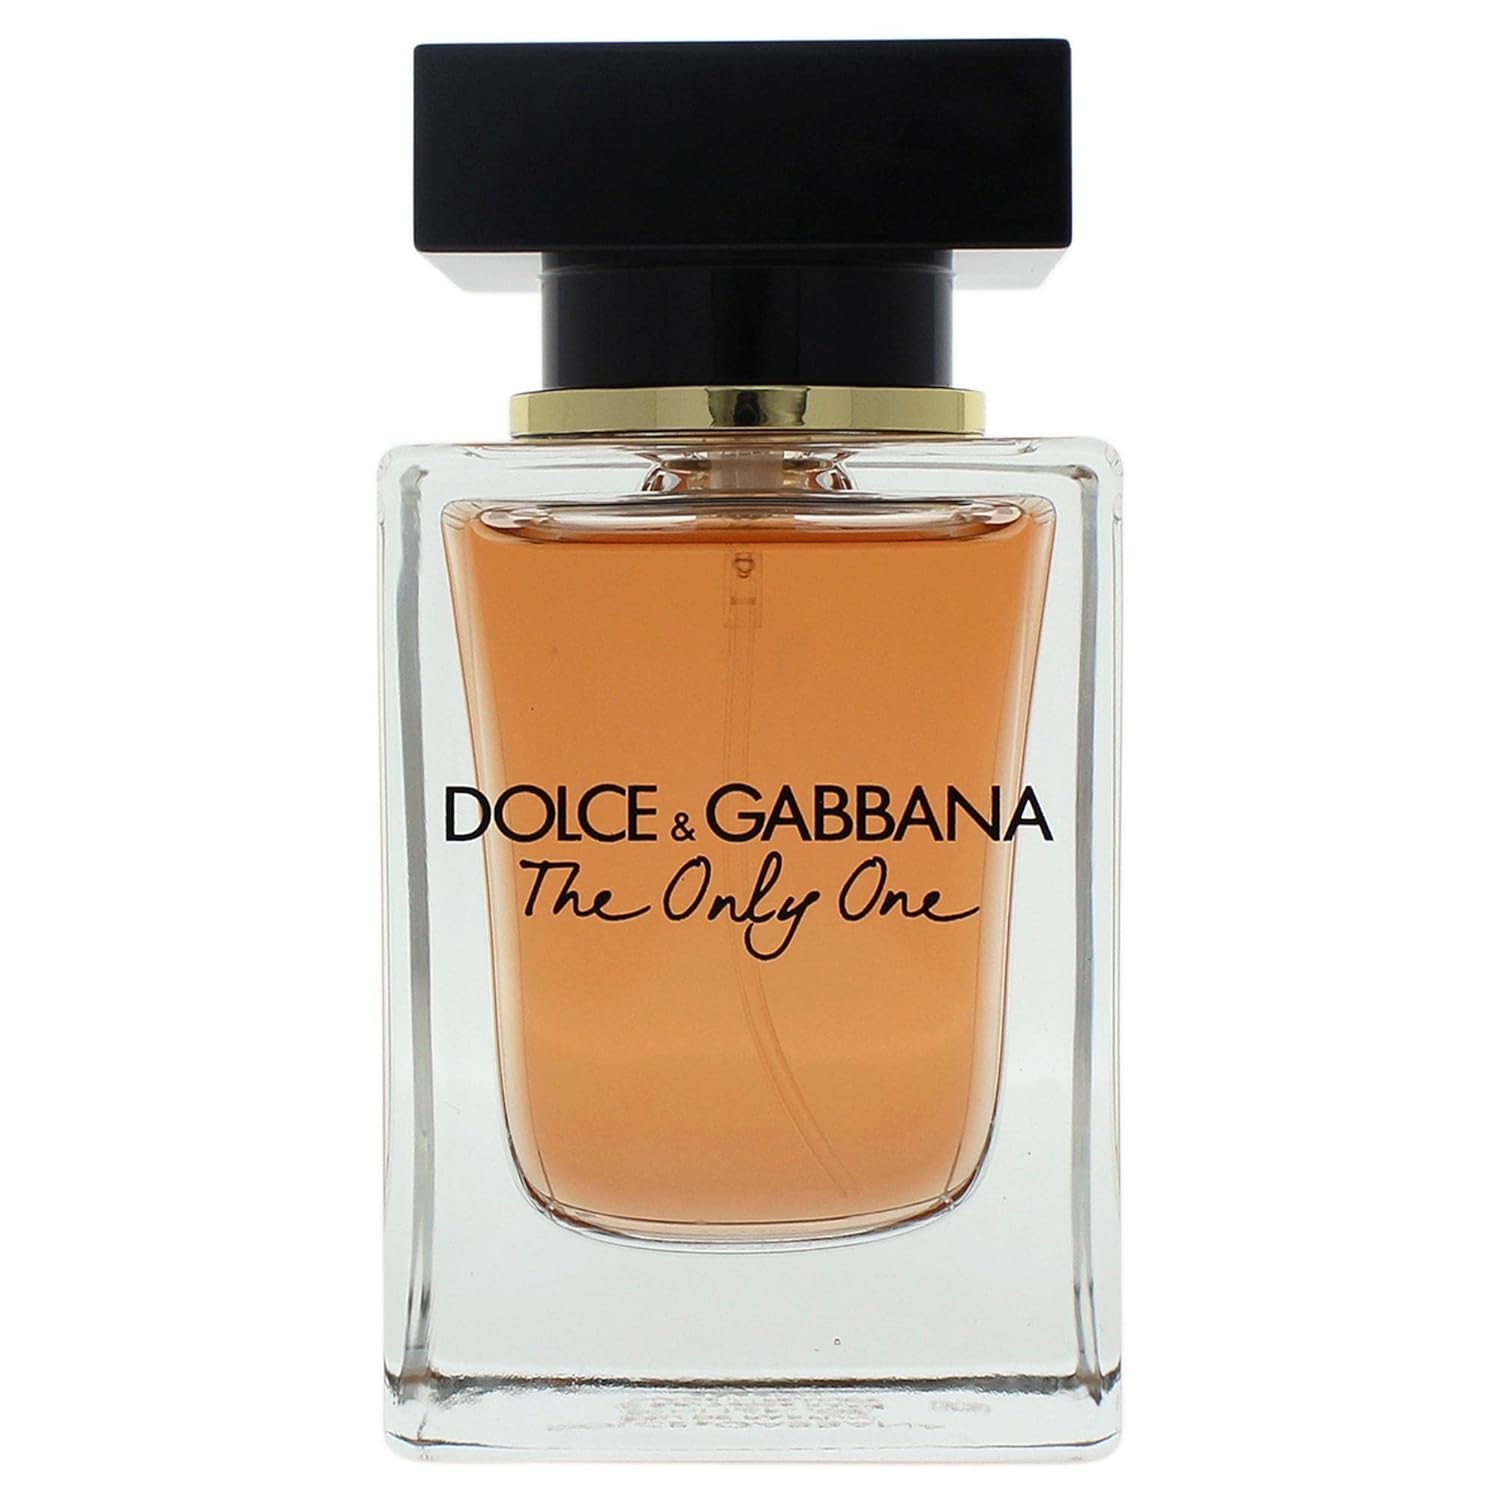 Dolce & Gabbana The Only One Eau De Parfum Spray for Women